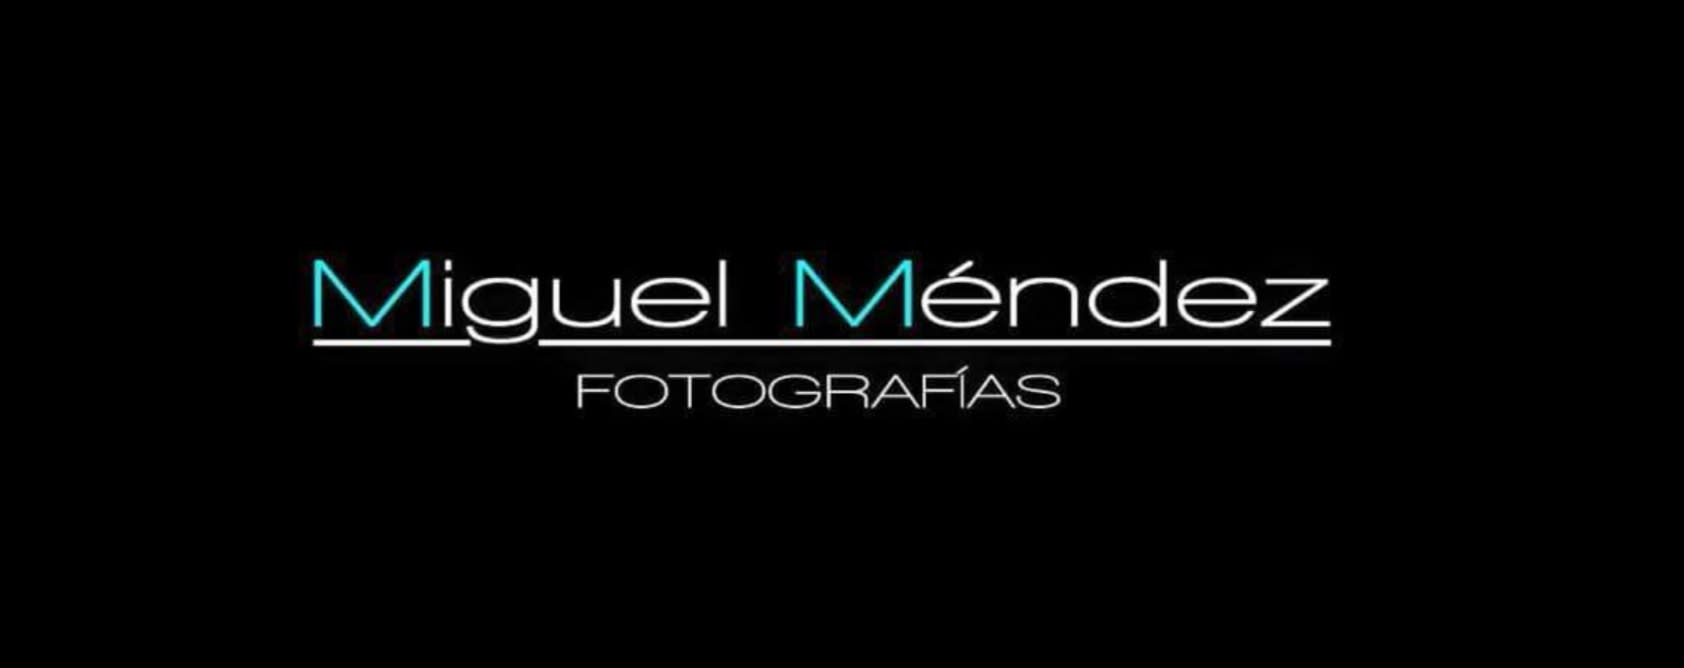 Miguel Mendez Fotografias